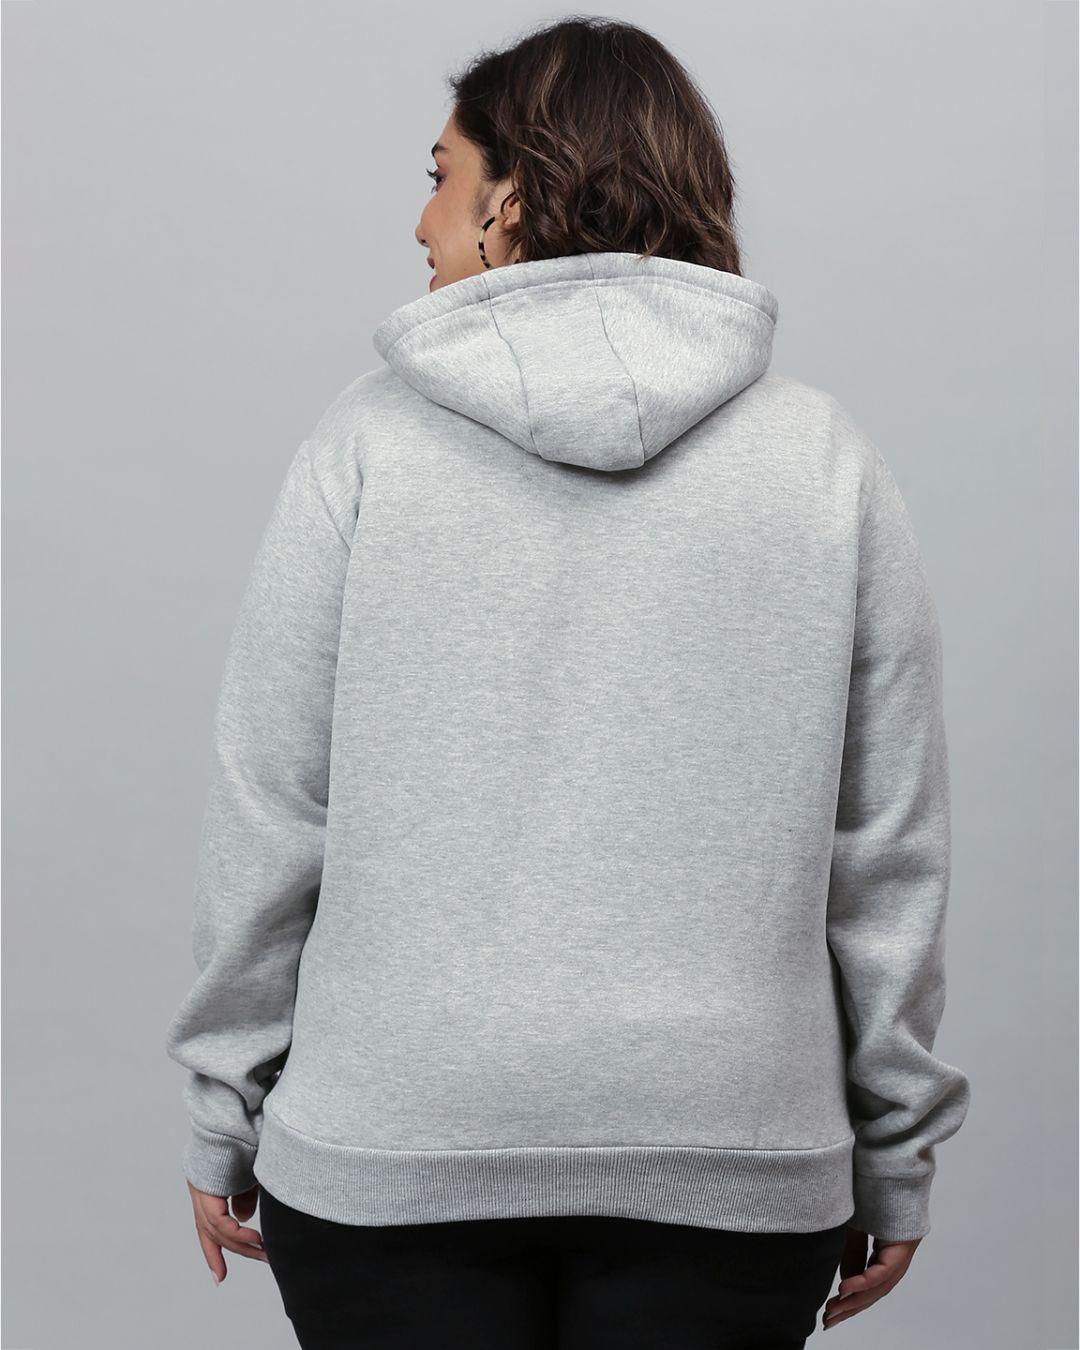 Shop Women's Grey Printed Stylish Casual Hooded Sweatshirt-Back